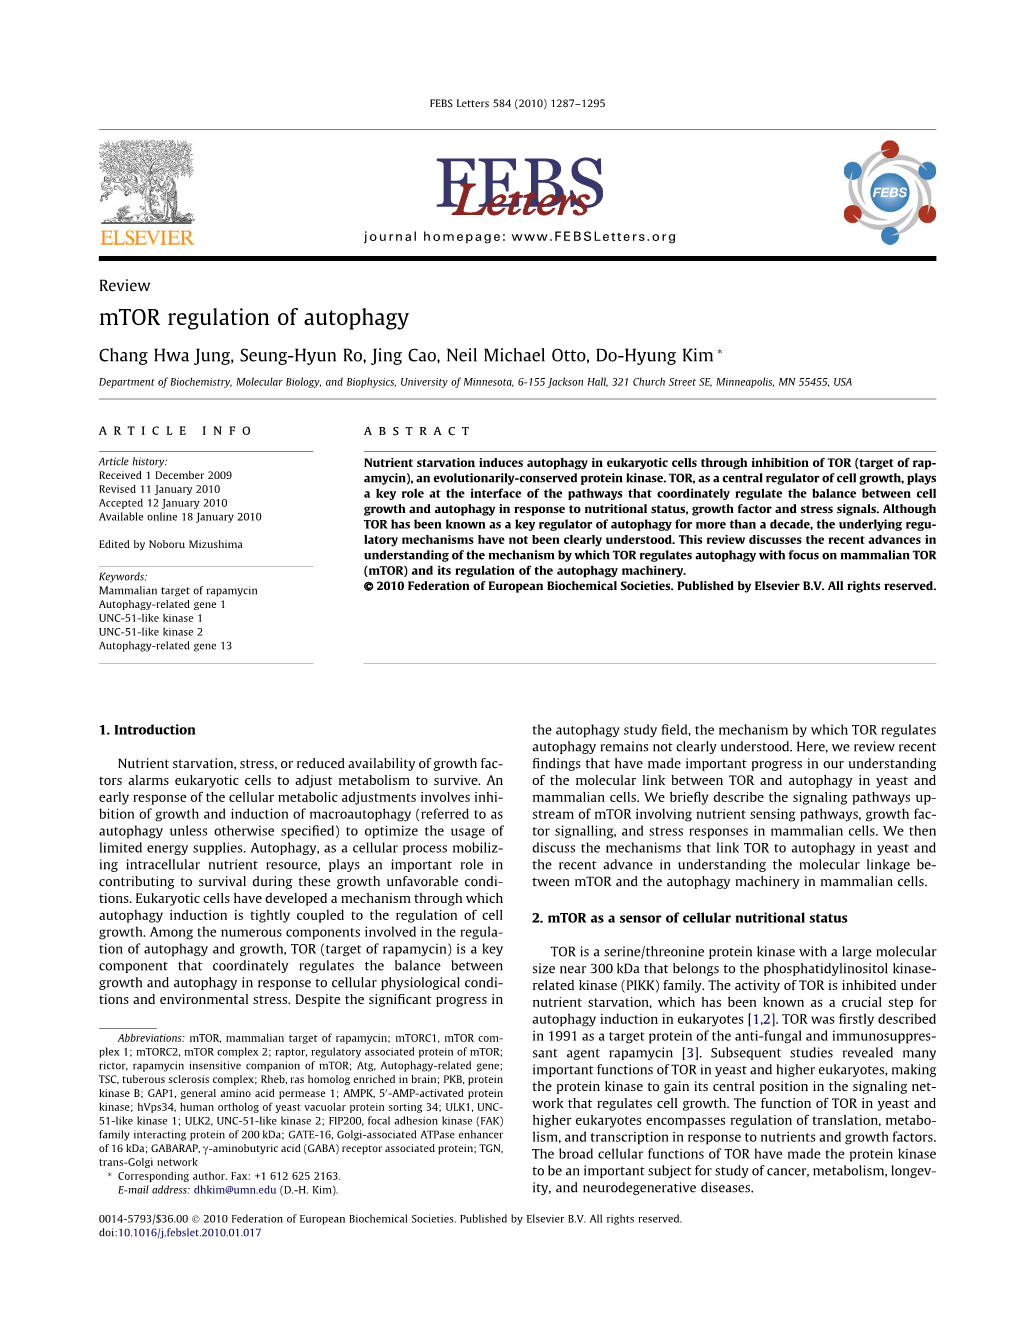 Mtor Regulation of Autophagy